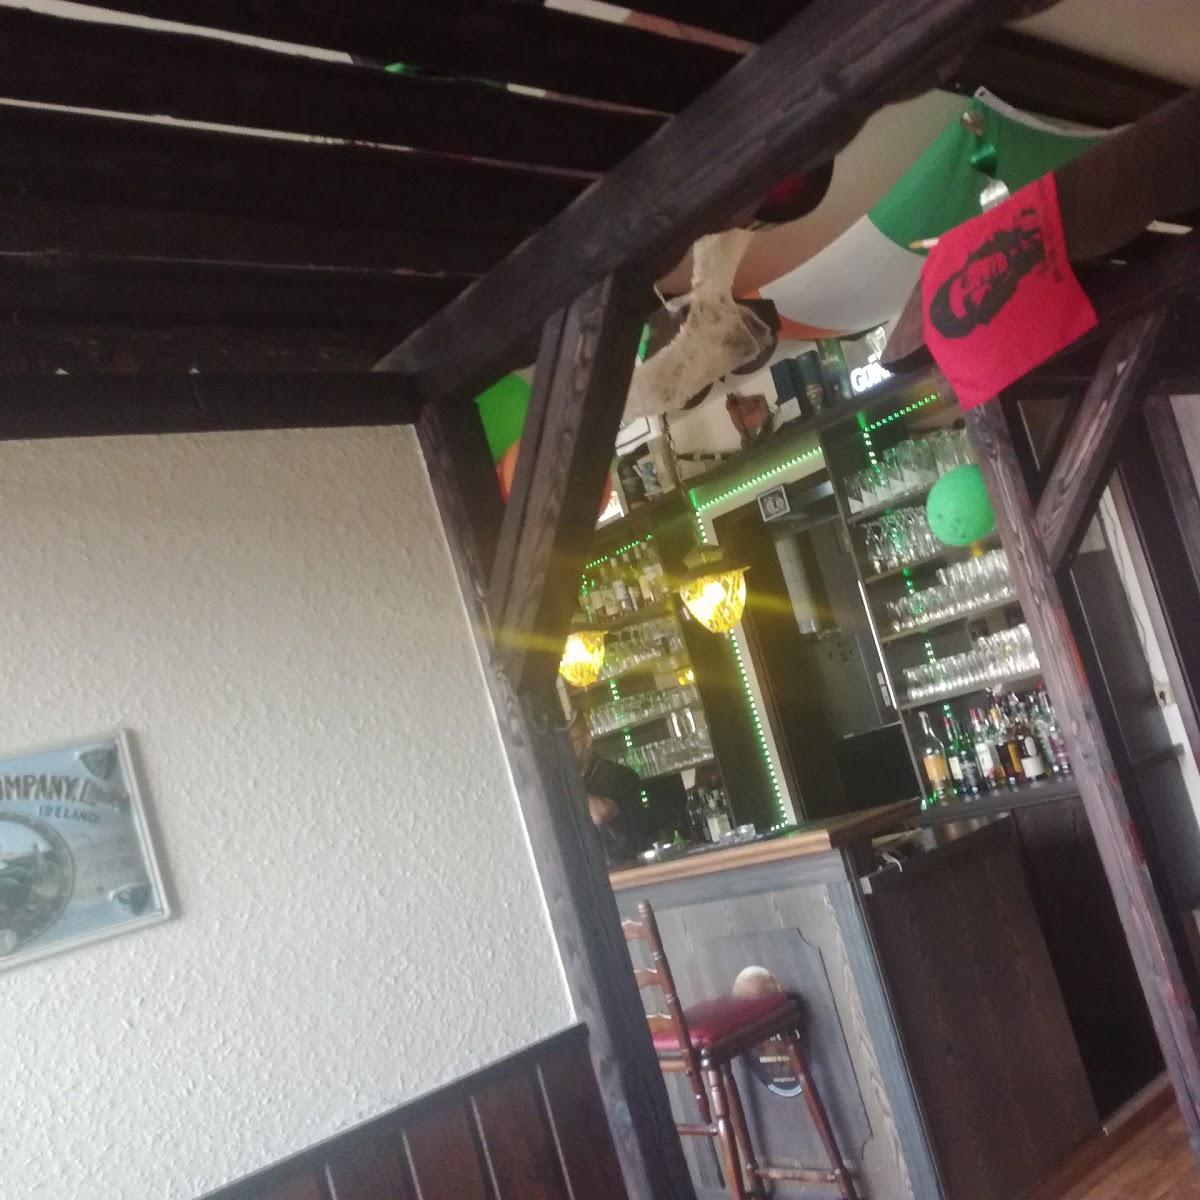 Restaurant "Little Irish Pub" in Marne